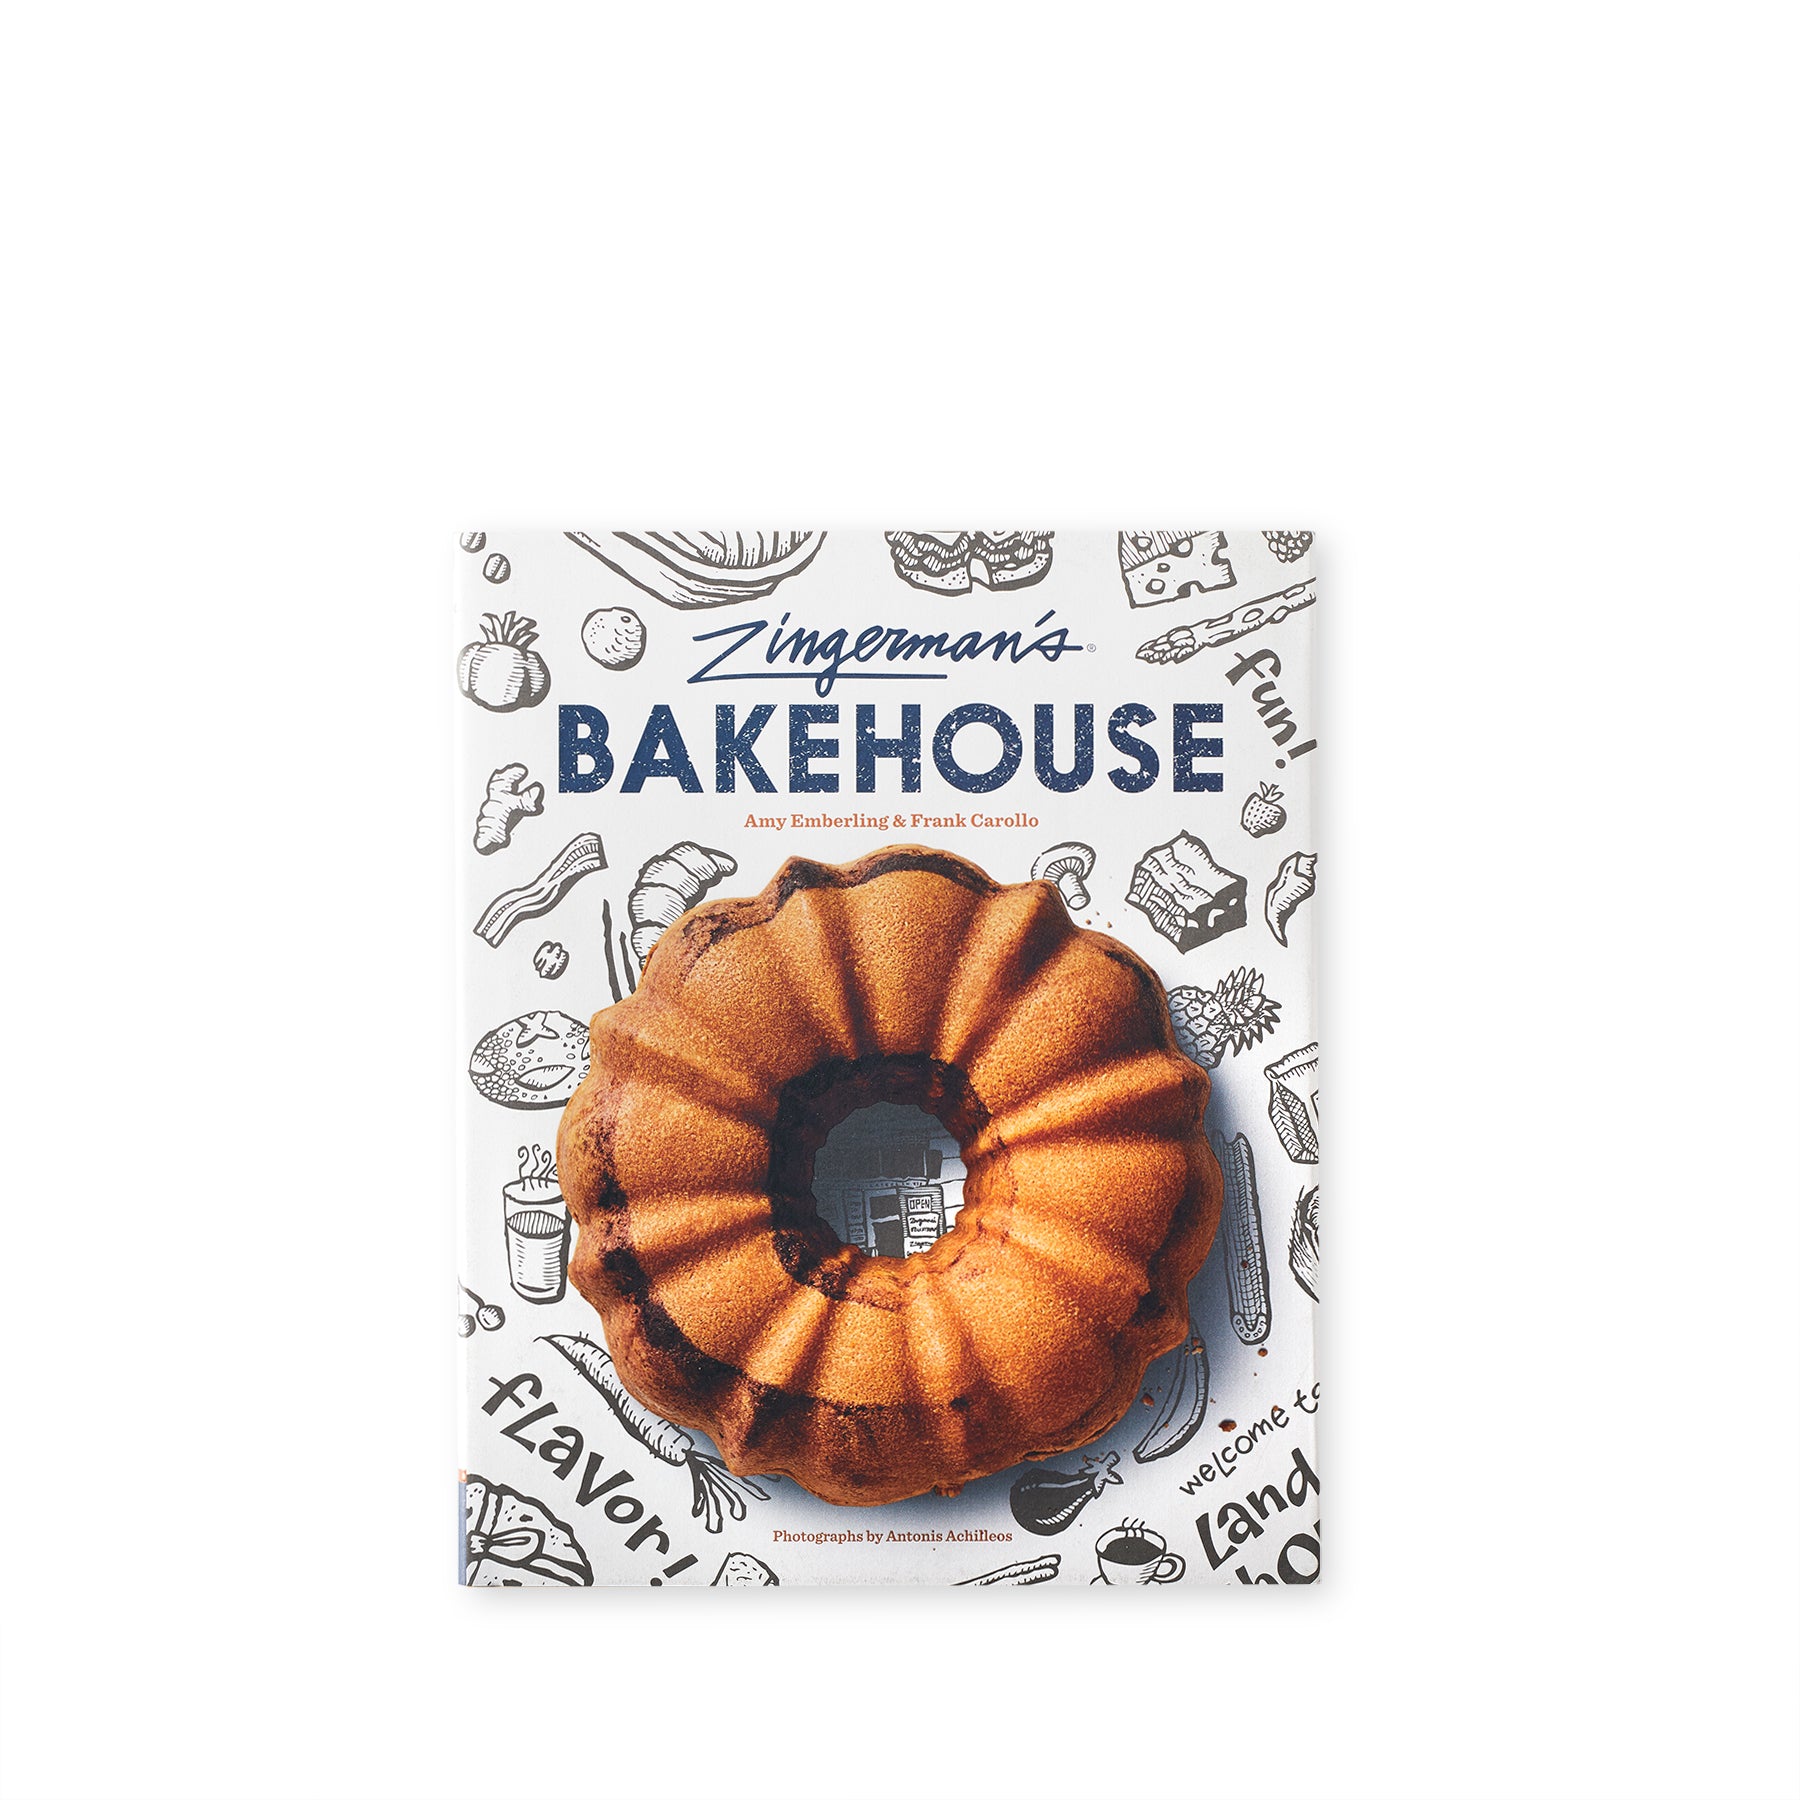 Zingerman's Bakehouse Zoom Image 1